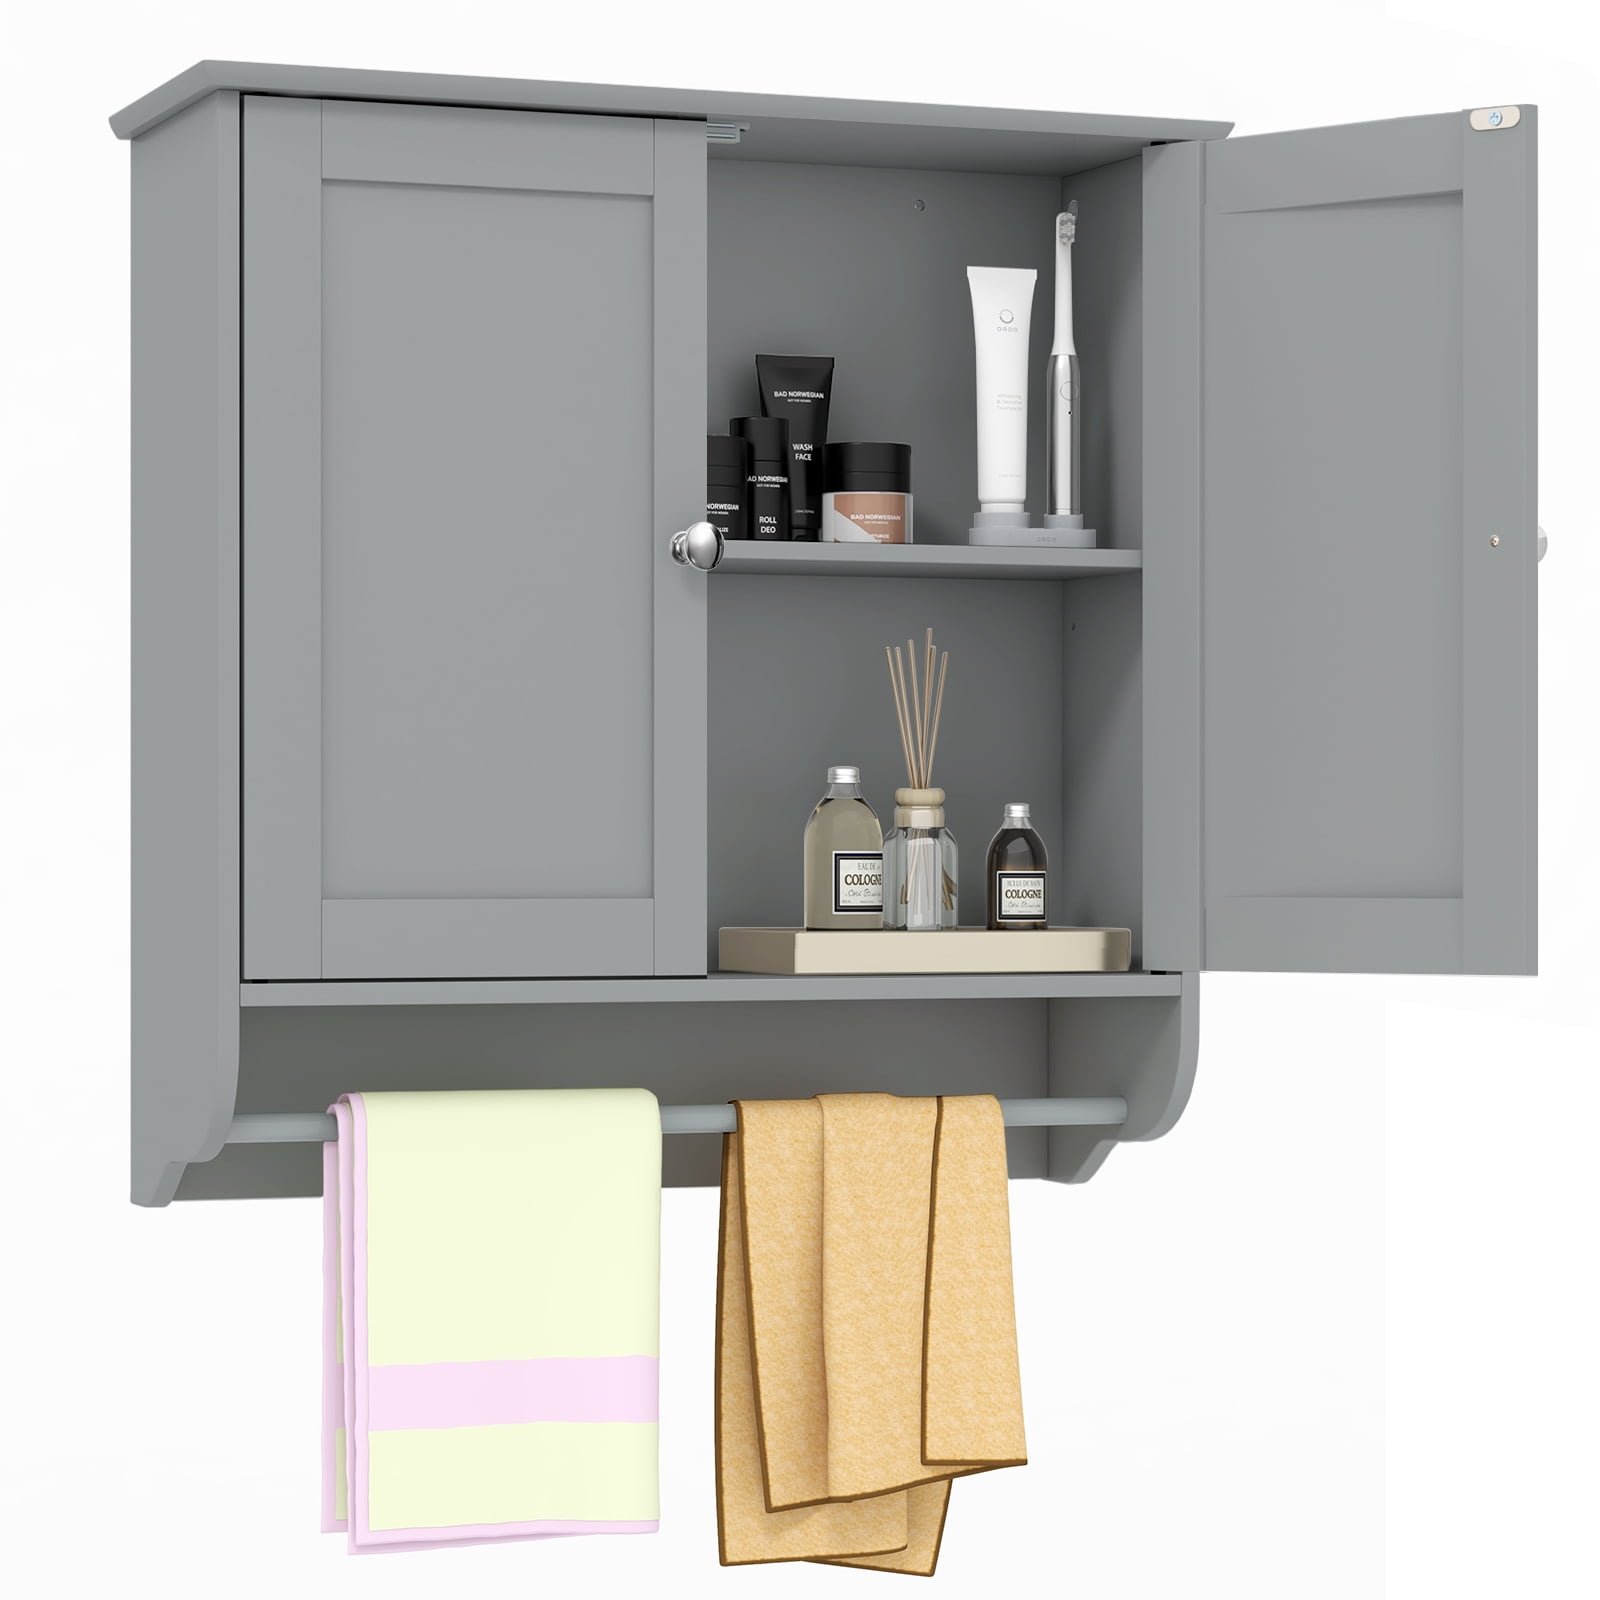 Wall Mounted Bathroom Medicine Cabinet Storage Cupboard w/ Towel